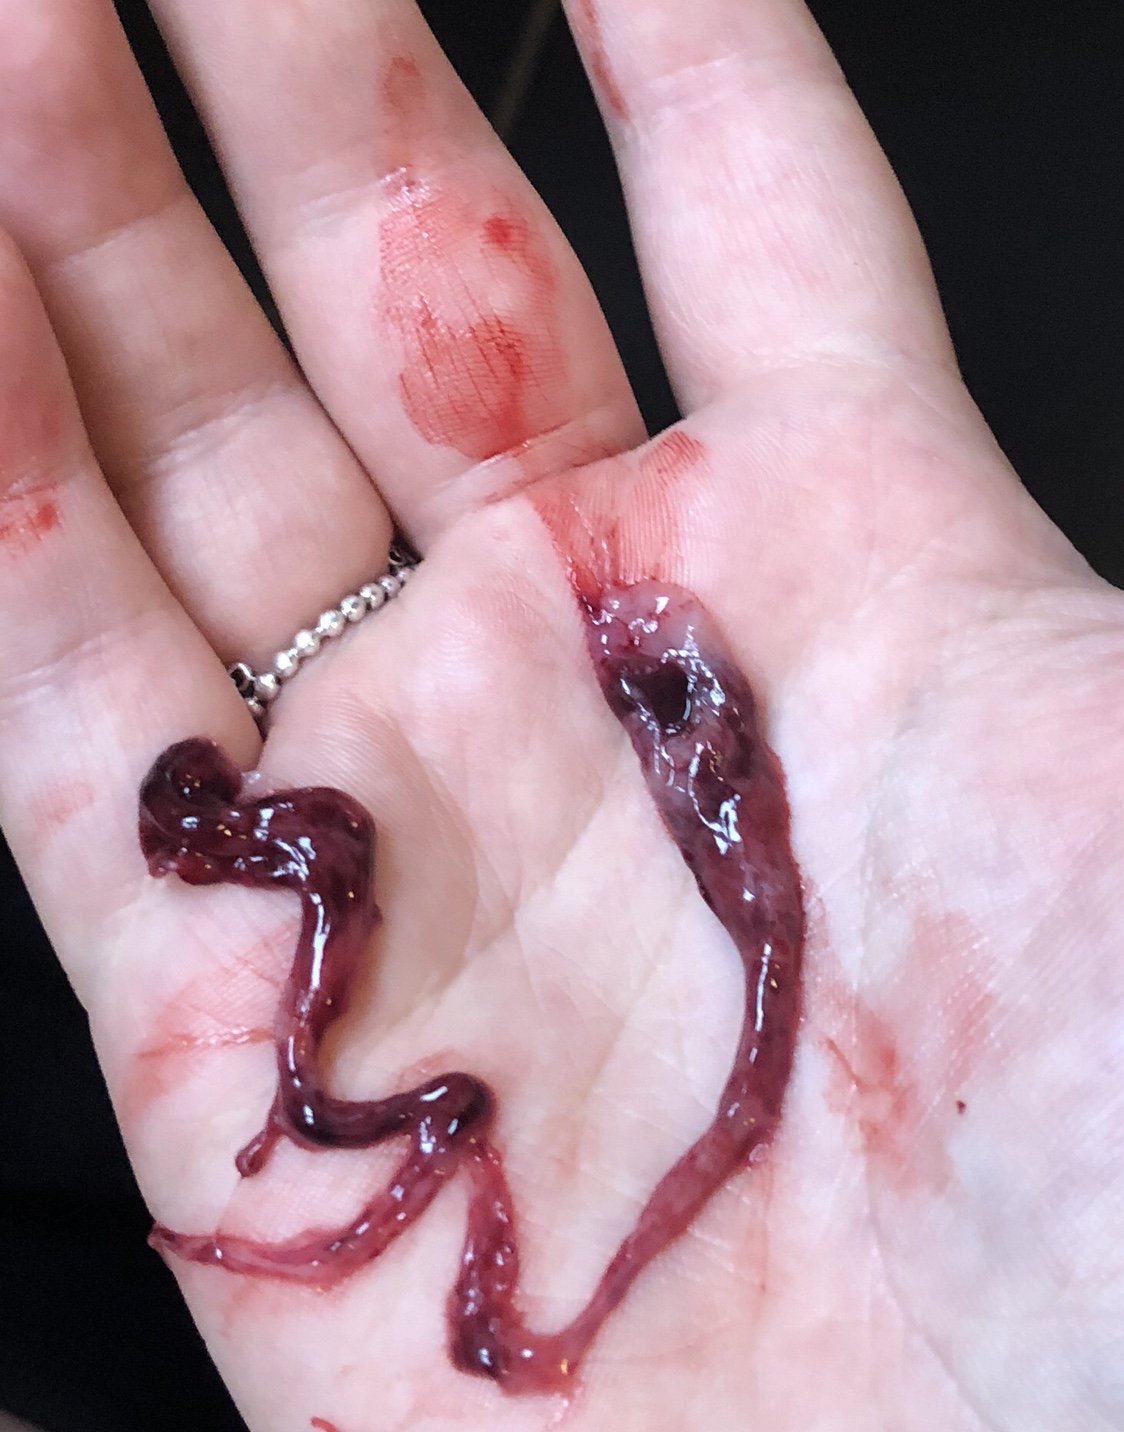 5+4 passing clots/tissue (graphic photo)